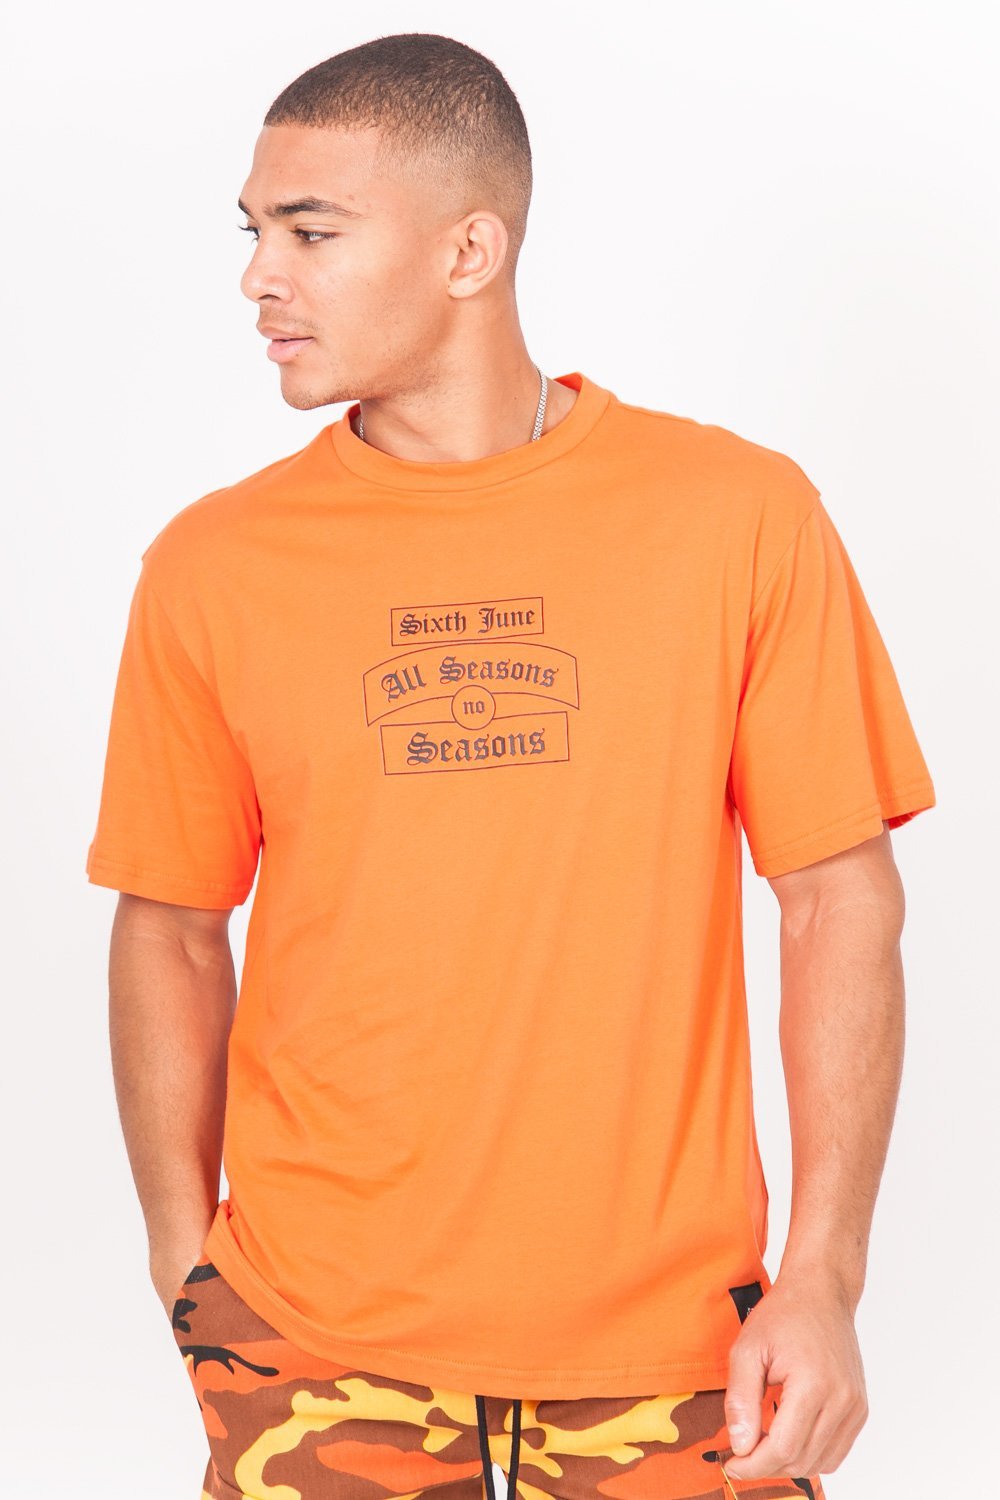 Sixth June - T-shirt gothique All seasons orange